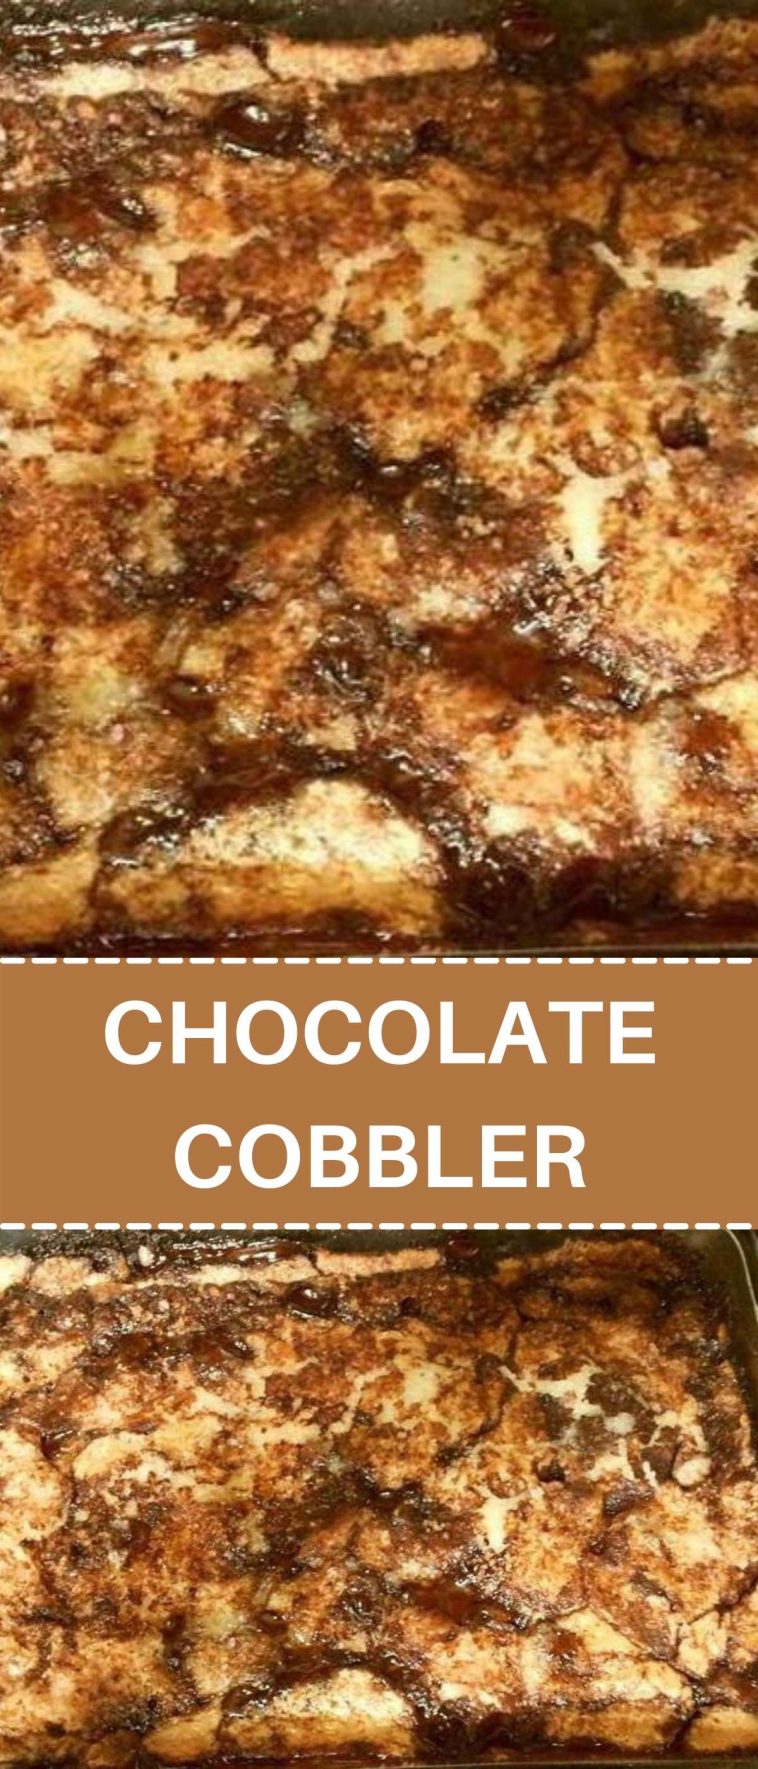 CHOCOLATE COBBLER